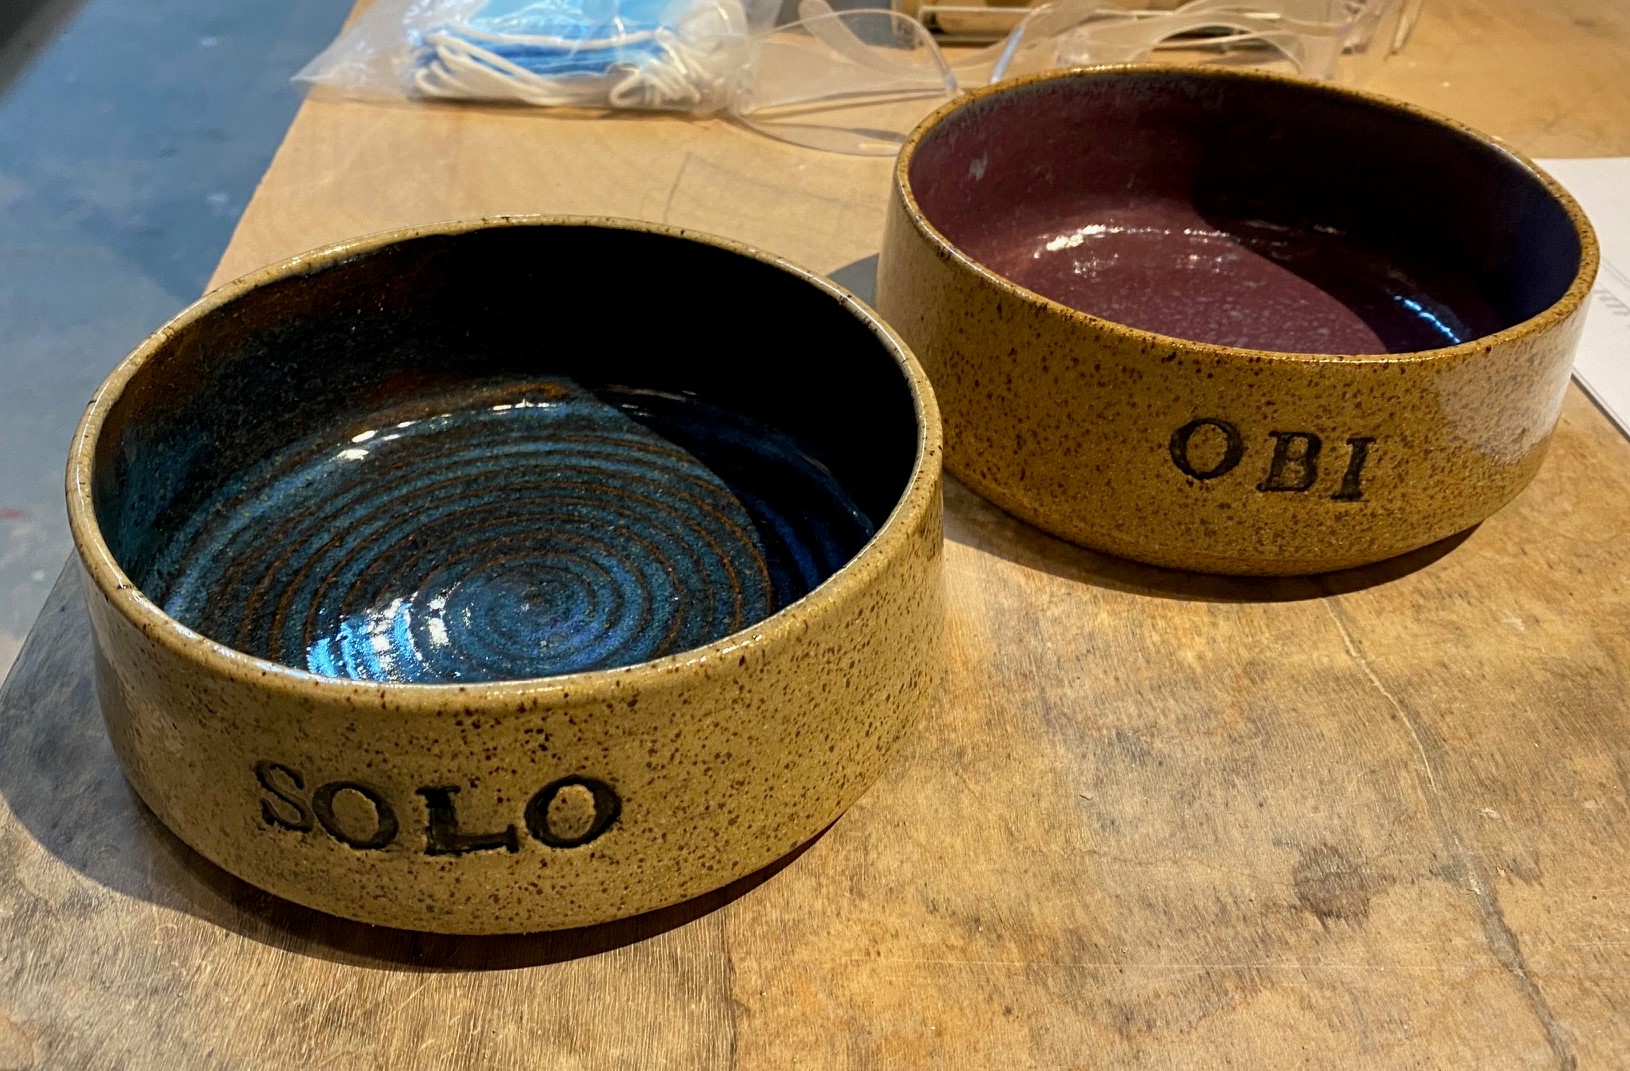 Custom dog bowls for Obi and Solo (aka the goodest boys)